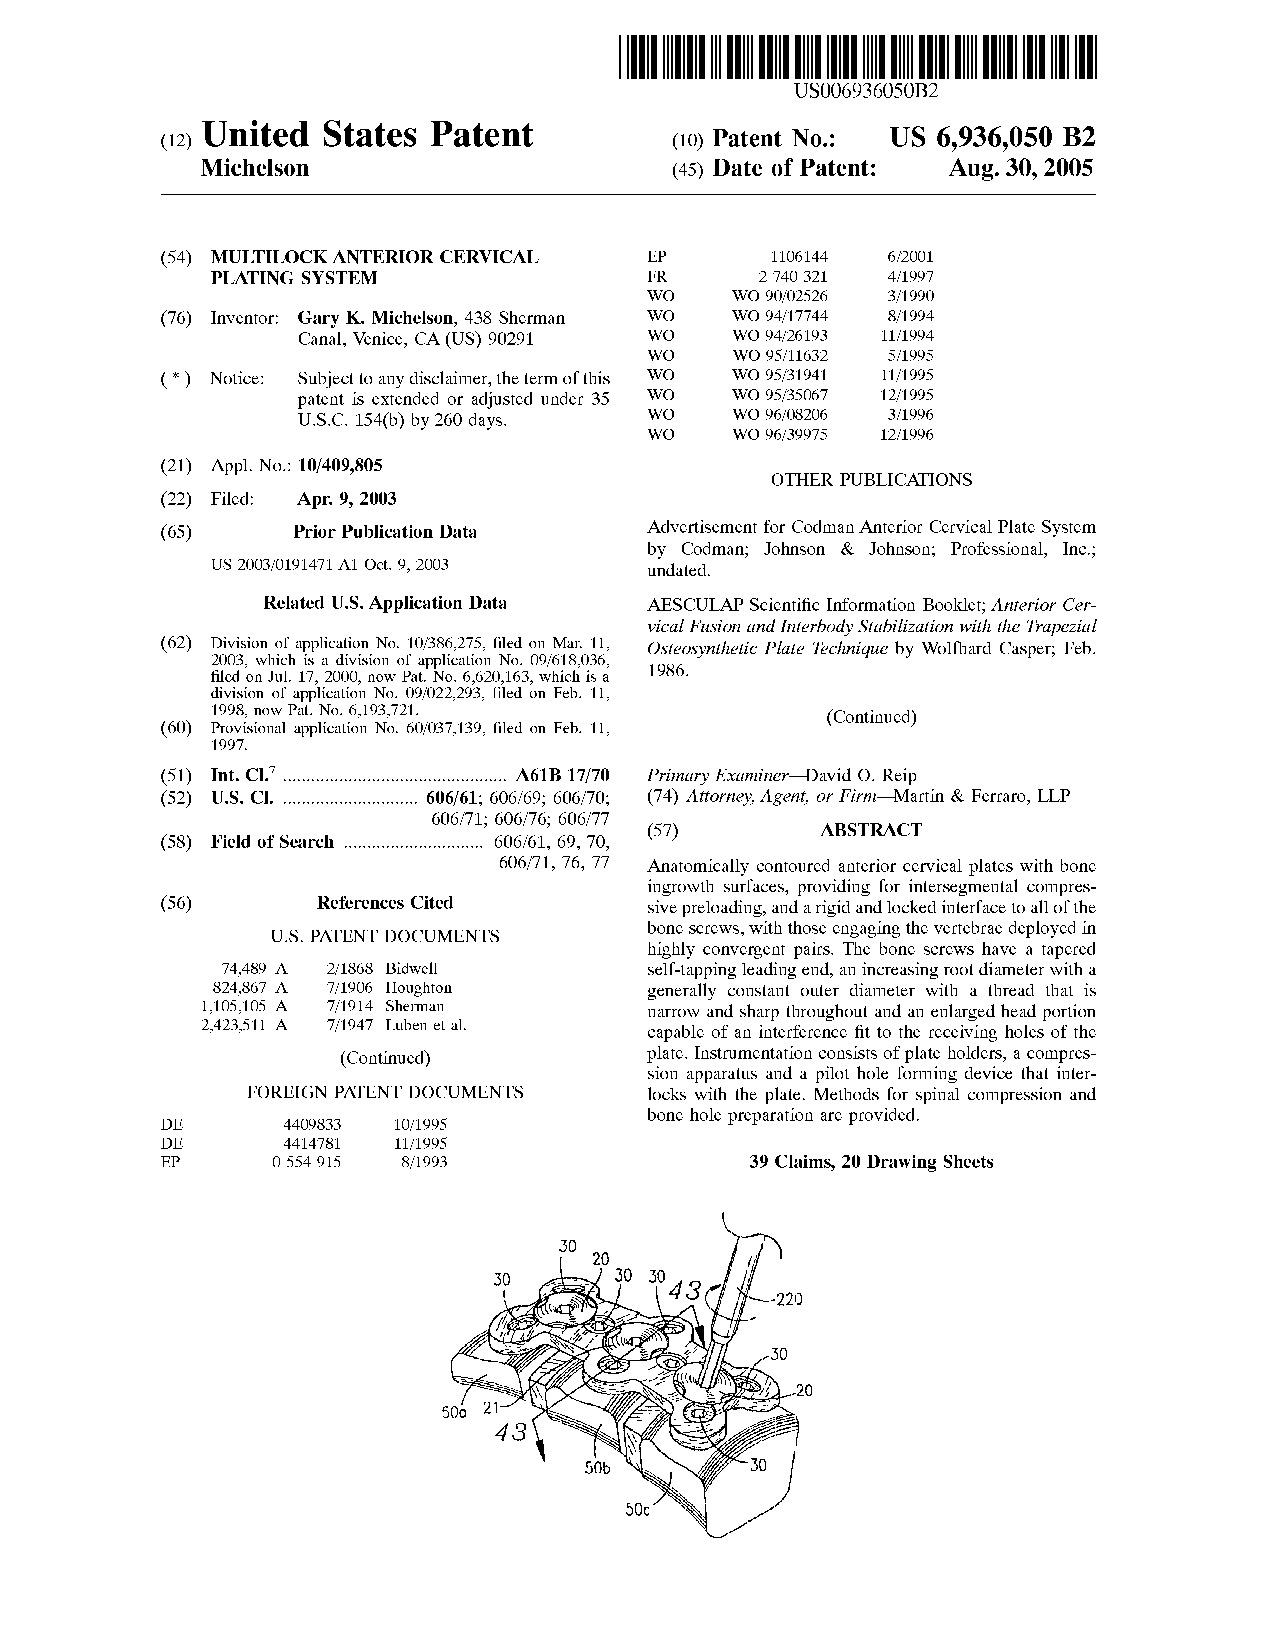 Multilock anterior cervical plating system - Patent 6,936,050